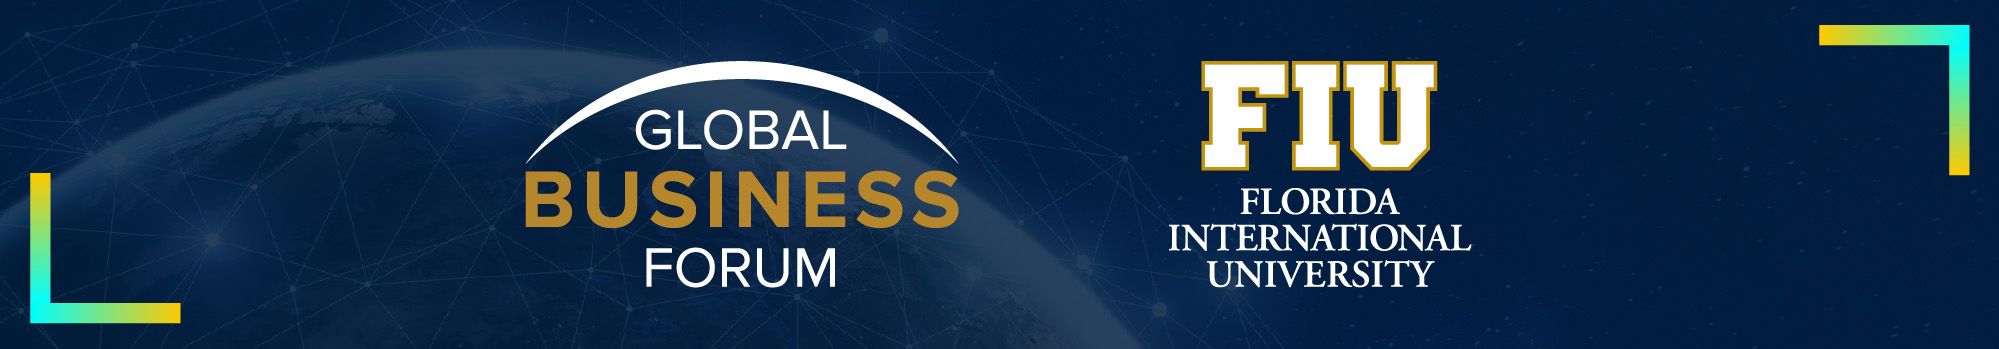 Global Business Forum Show Hosts